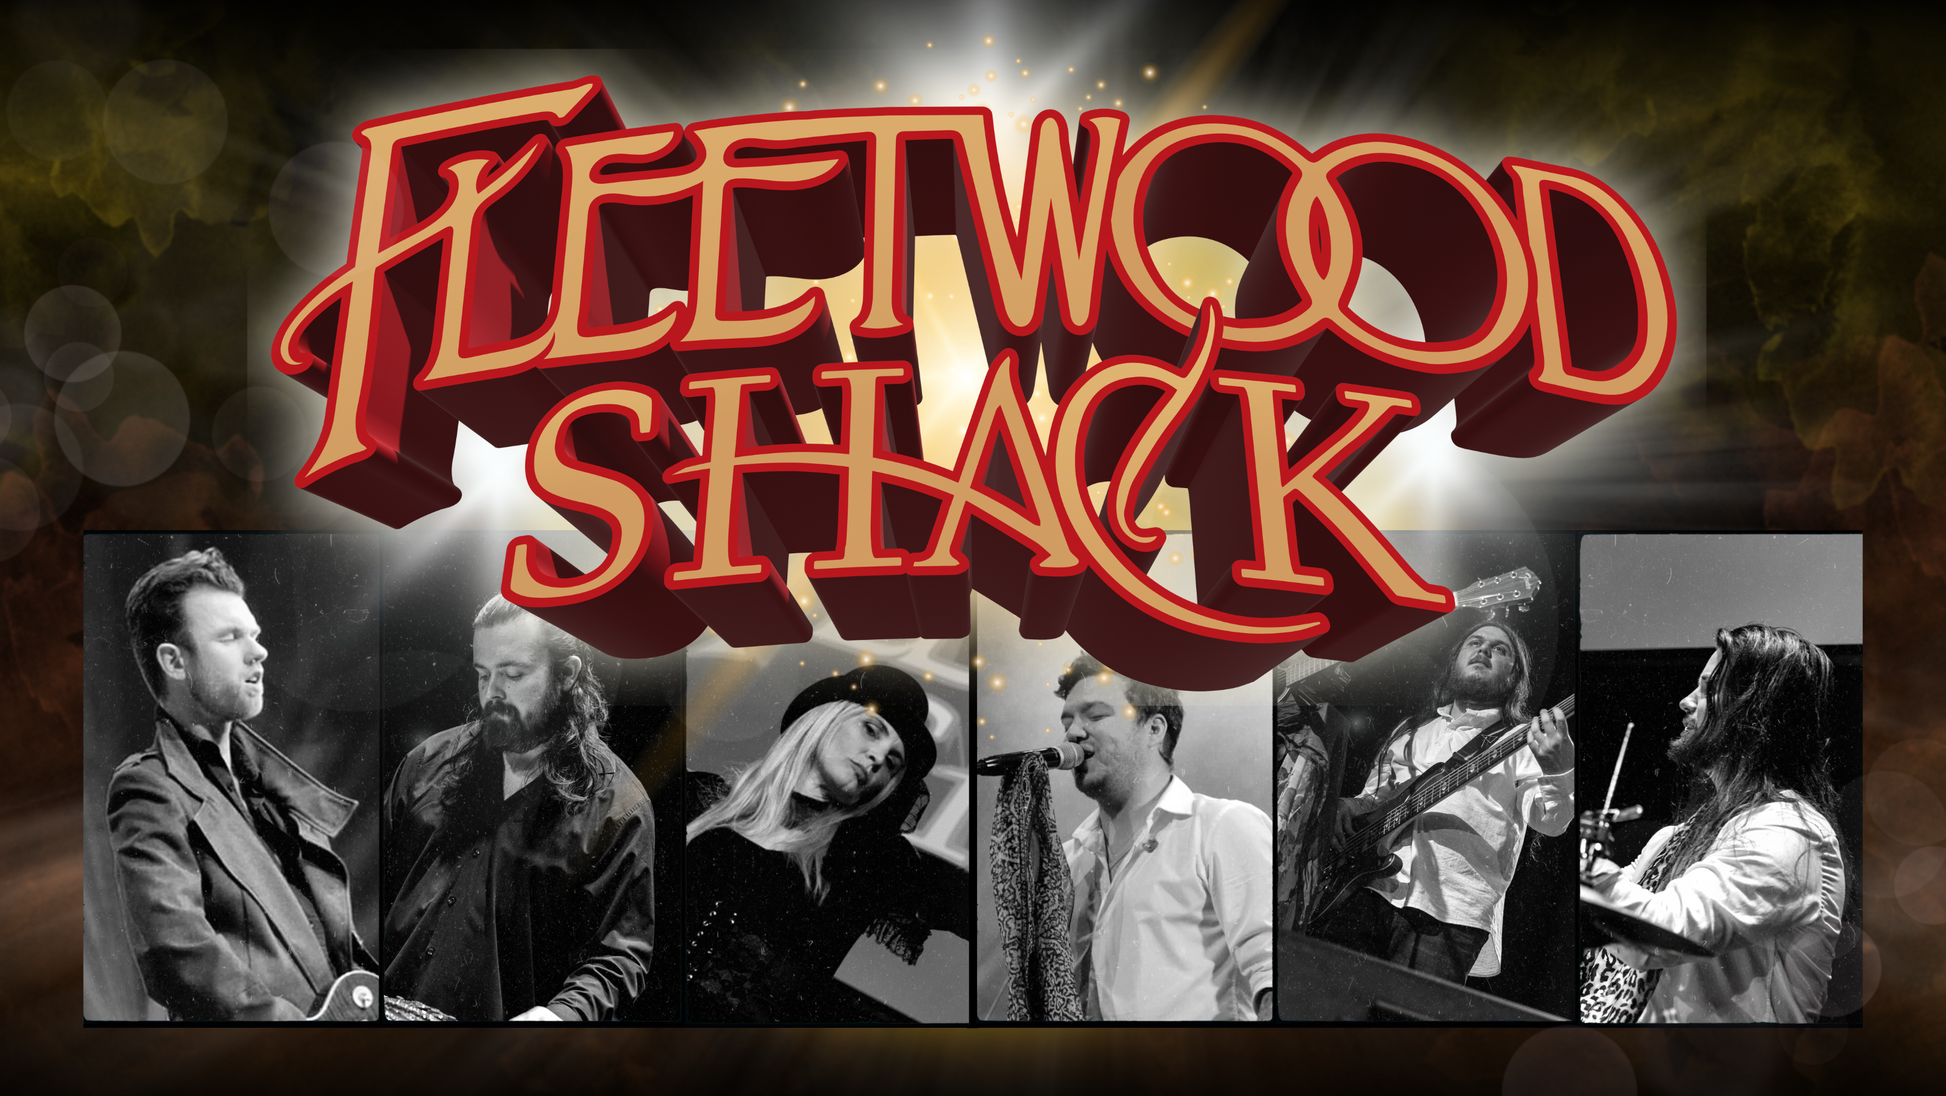 Fleetwood Mac Tribute Fleetwood Shack at The Attic in Southampton!